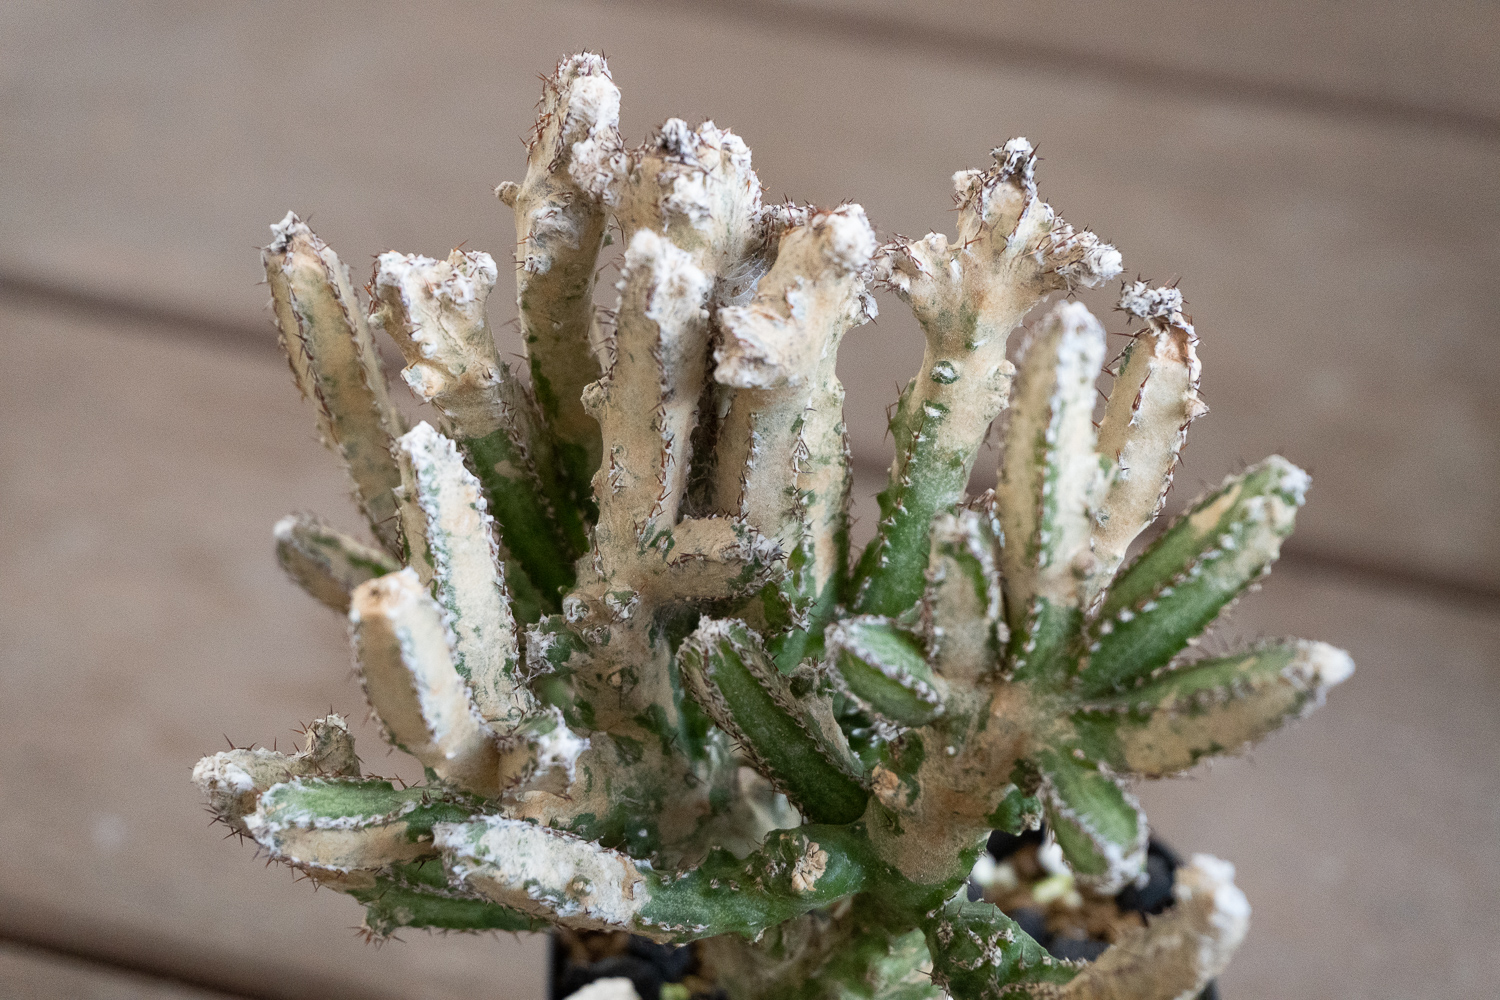 Cacti with spider mite damage